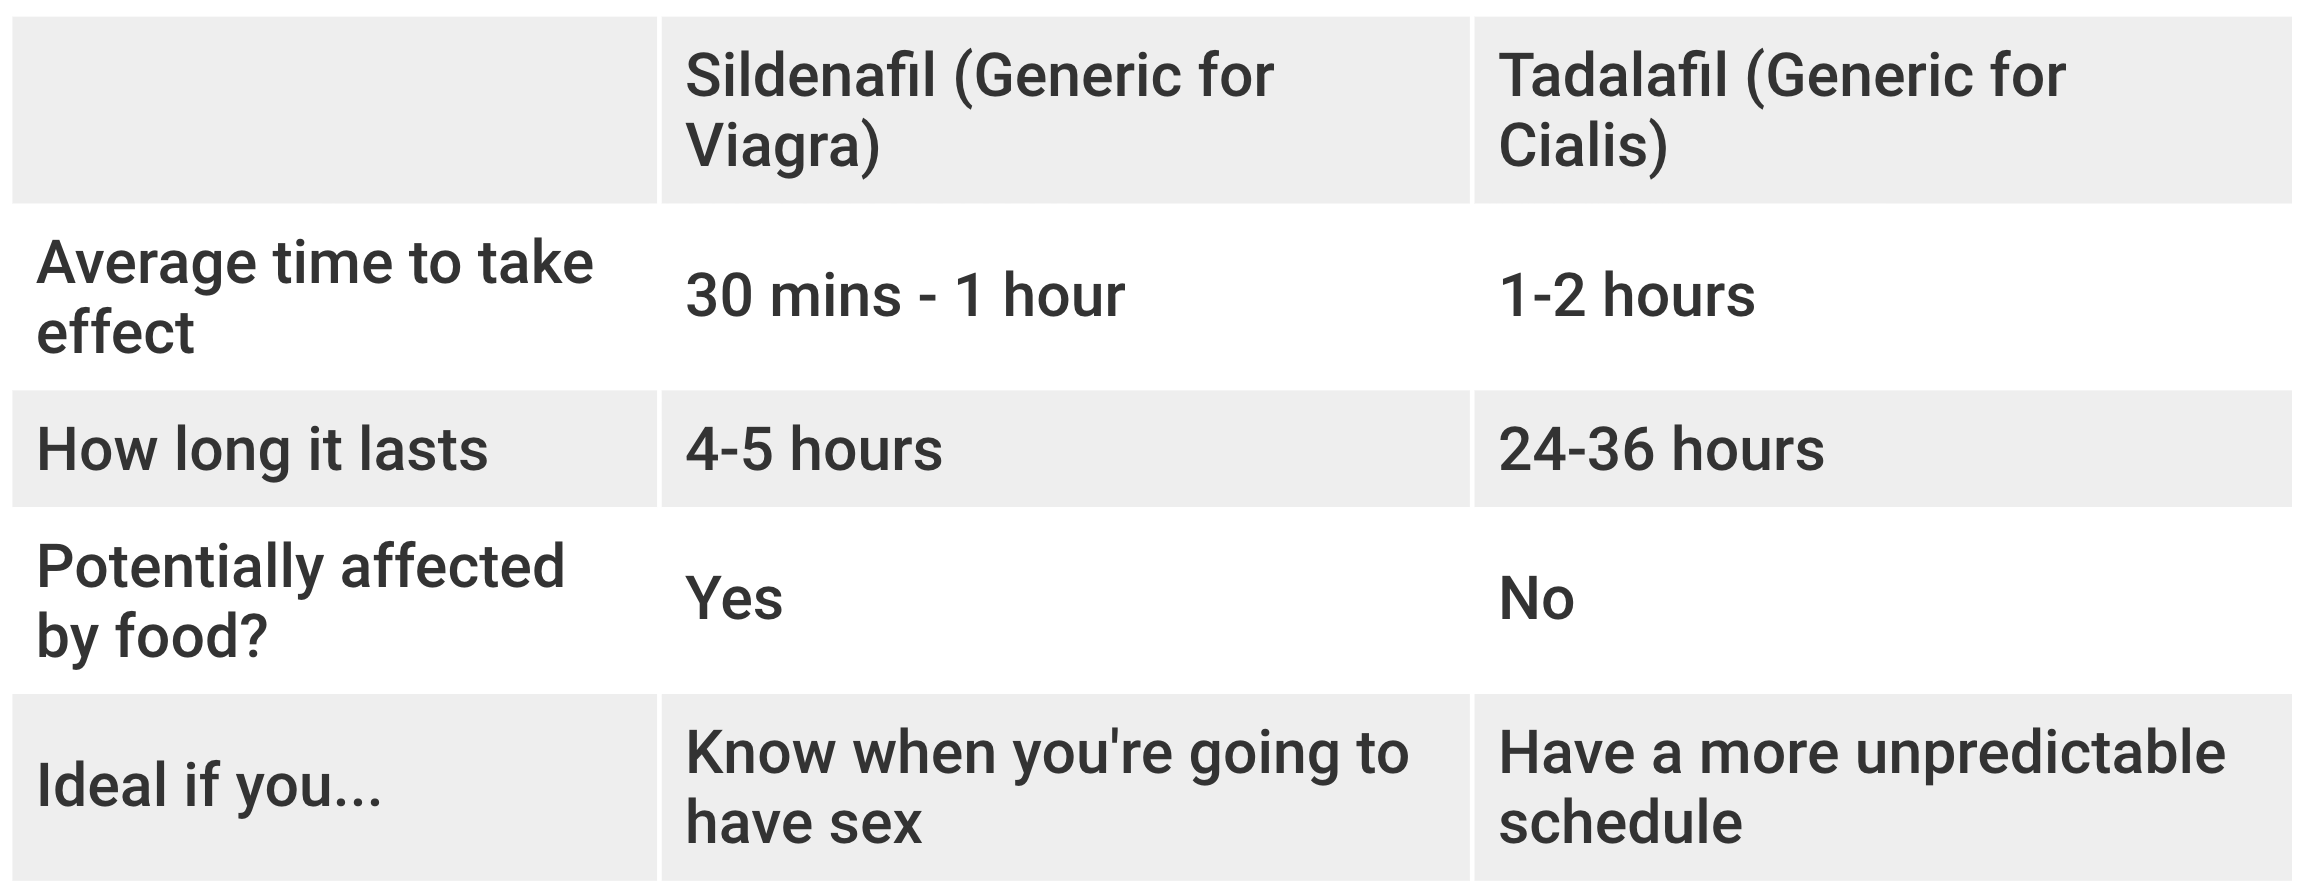 Comparison chart for Sildenafil (Viagra) vs Tadalafil (Cialis)